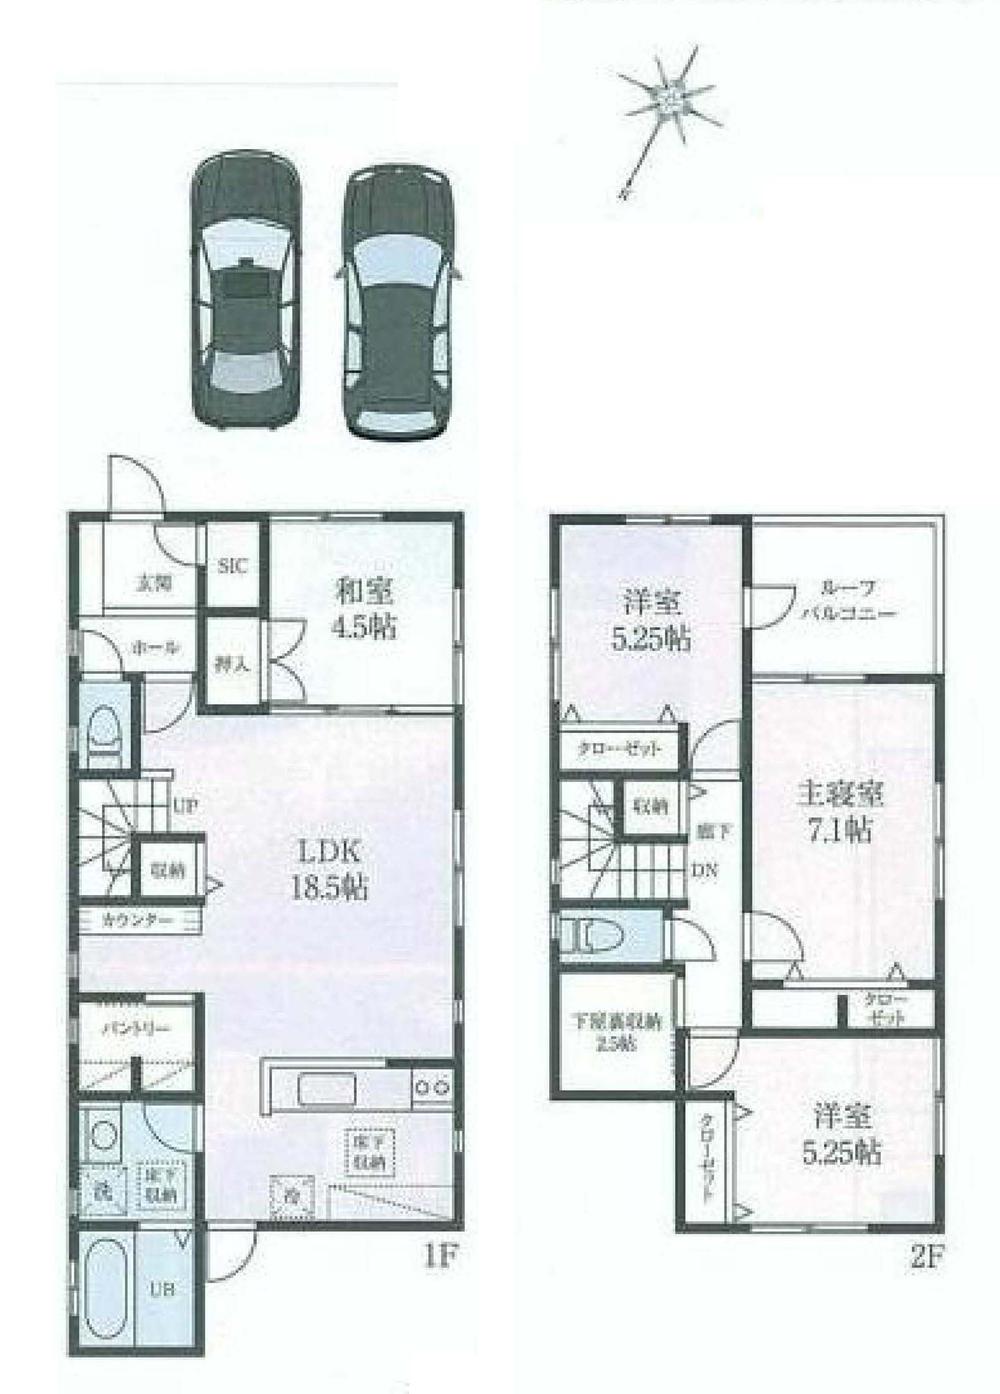 Floor plan. 47,900,000 yen, 4LDK, Land area 137.37 sq m , Building area 99.77 sq m